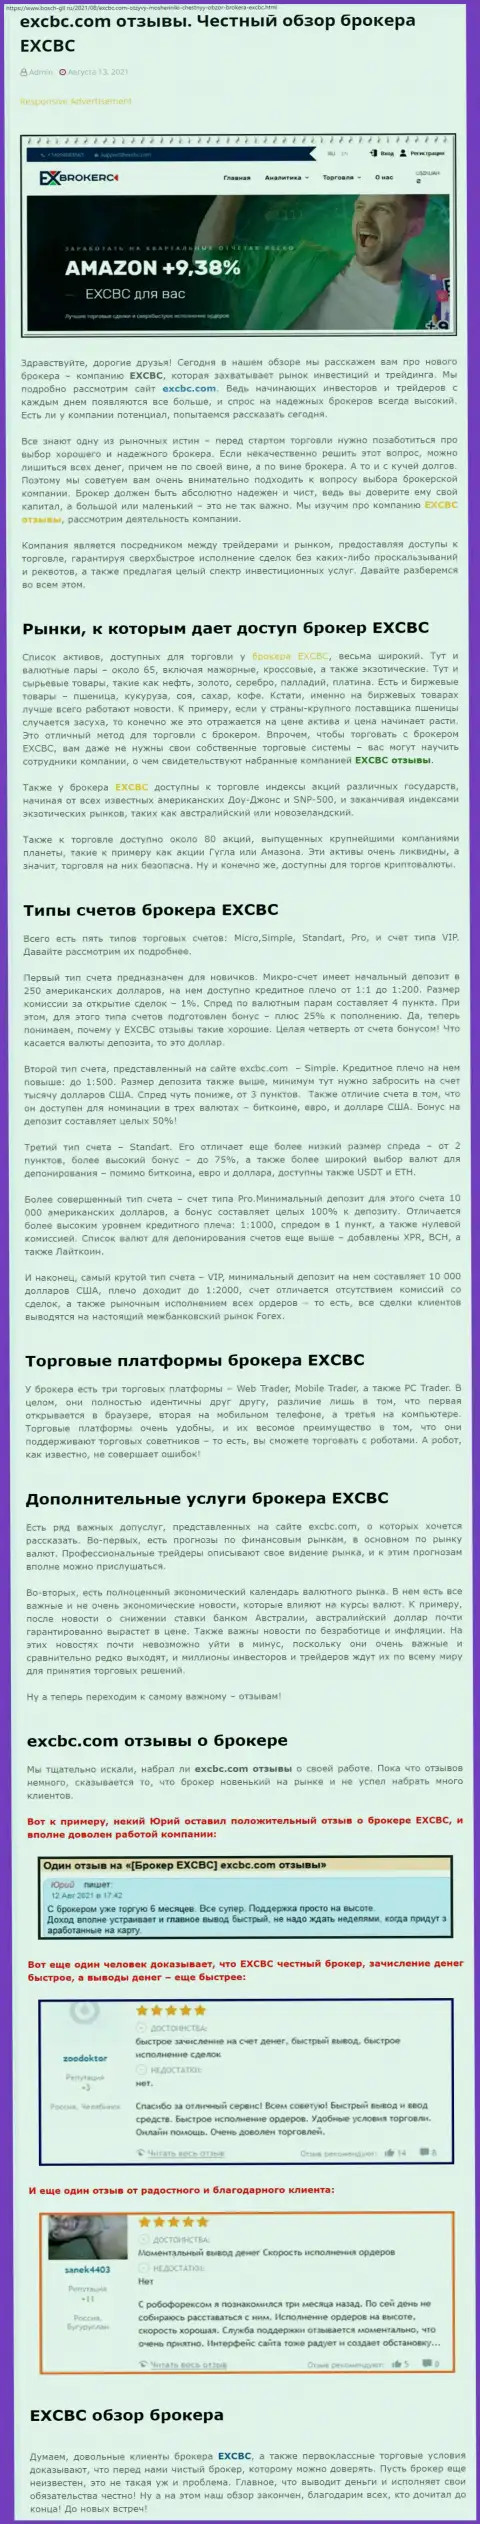 Информация о Форекс-организации EXCBC на web-сервисе бош-глл ру